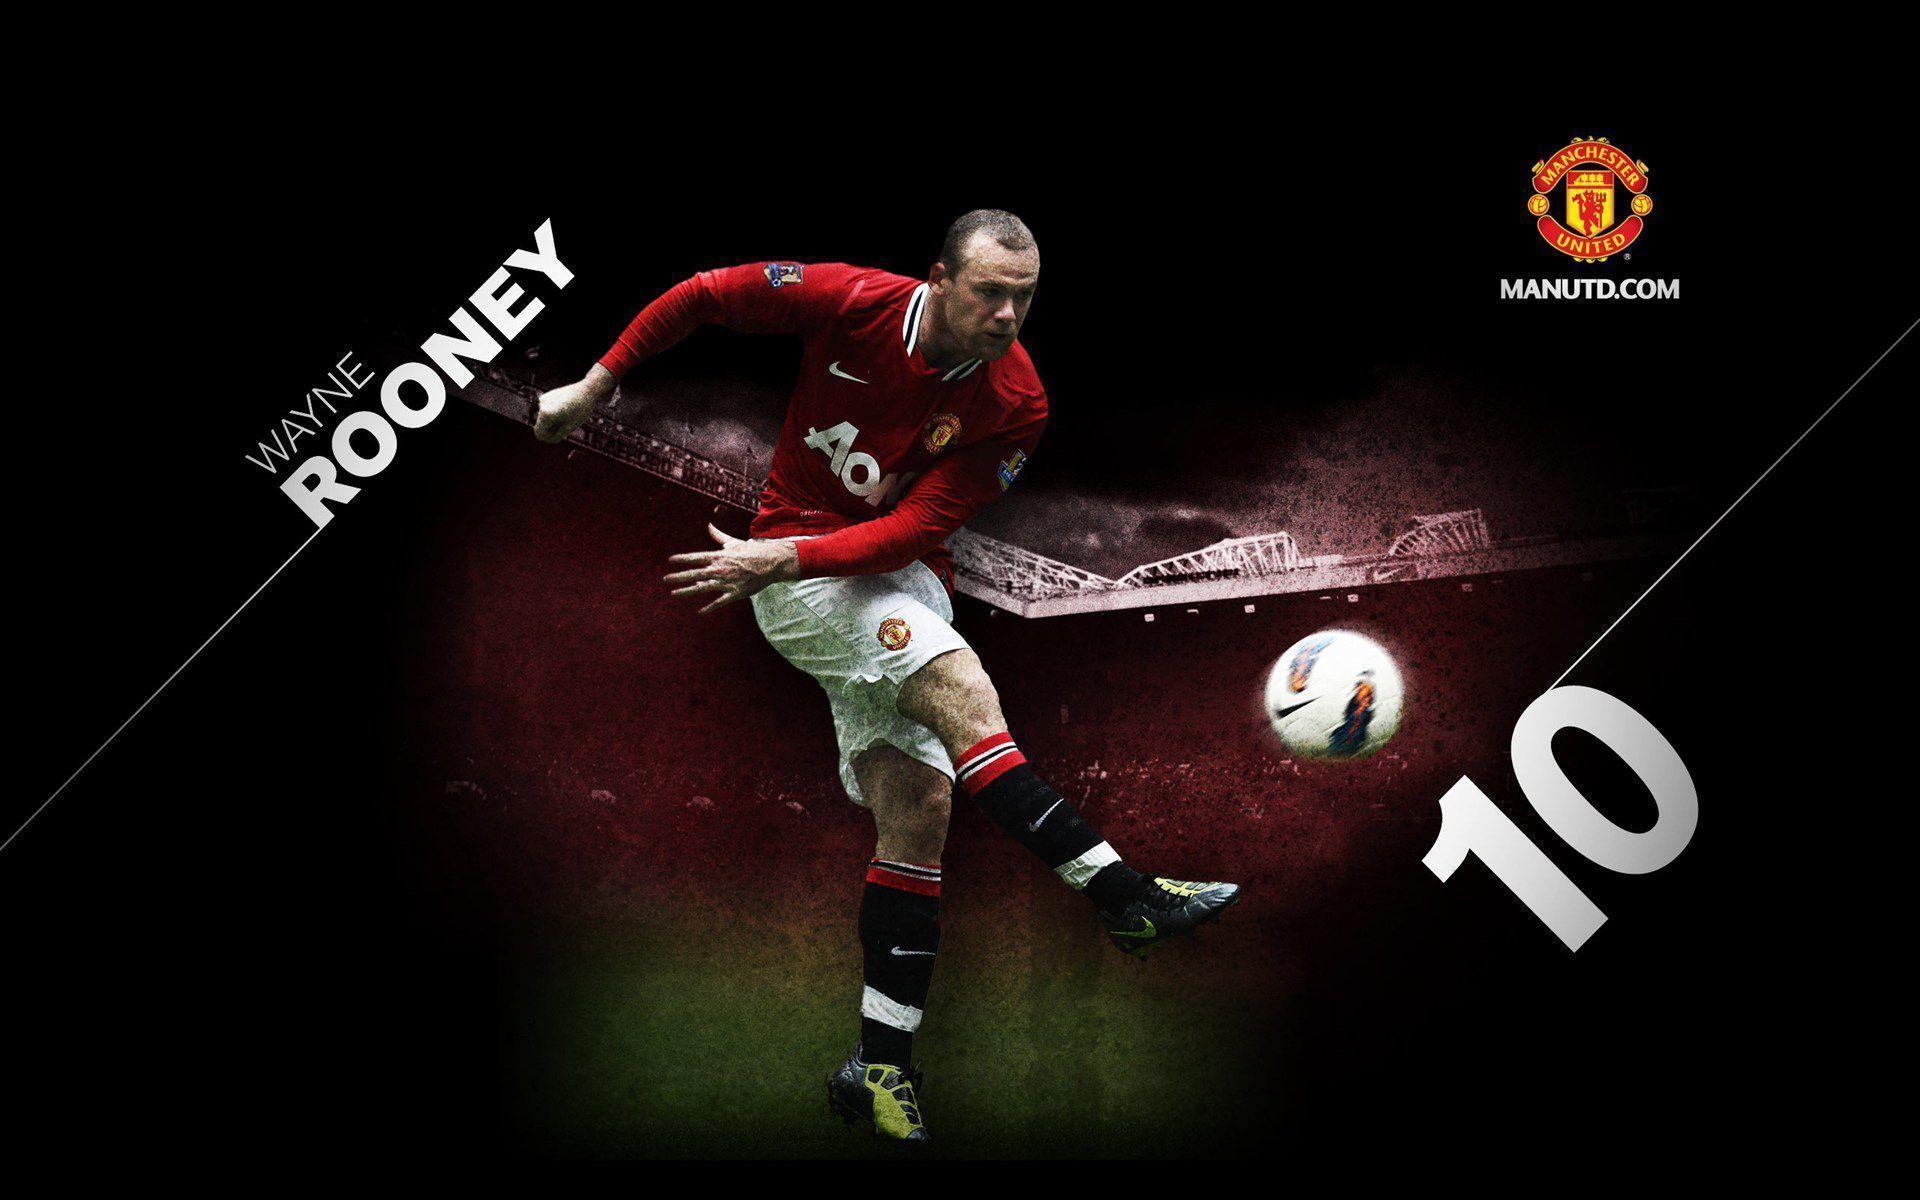 New Wayne Rooney Manchester United (id: 179229)